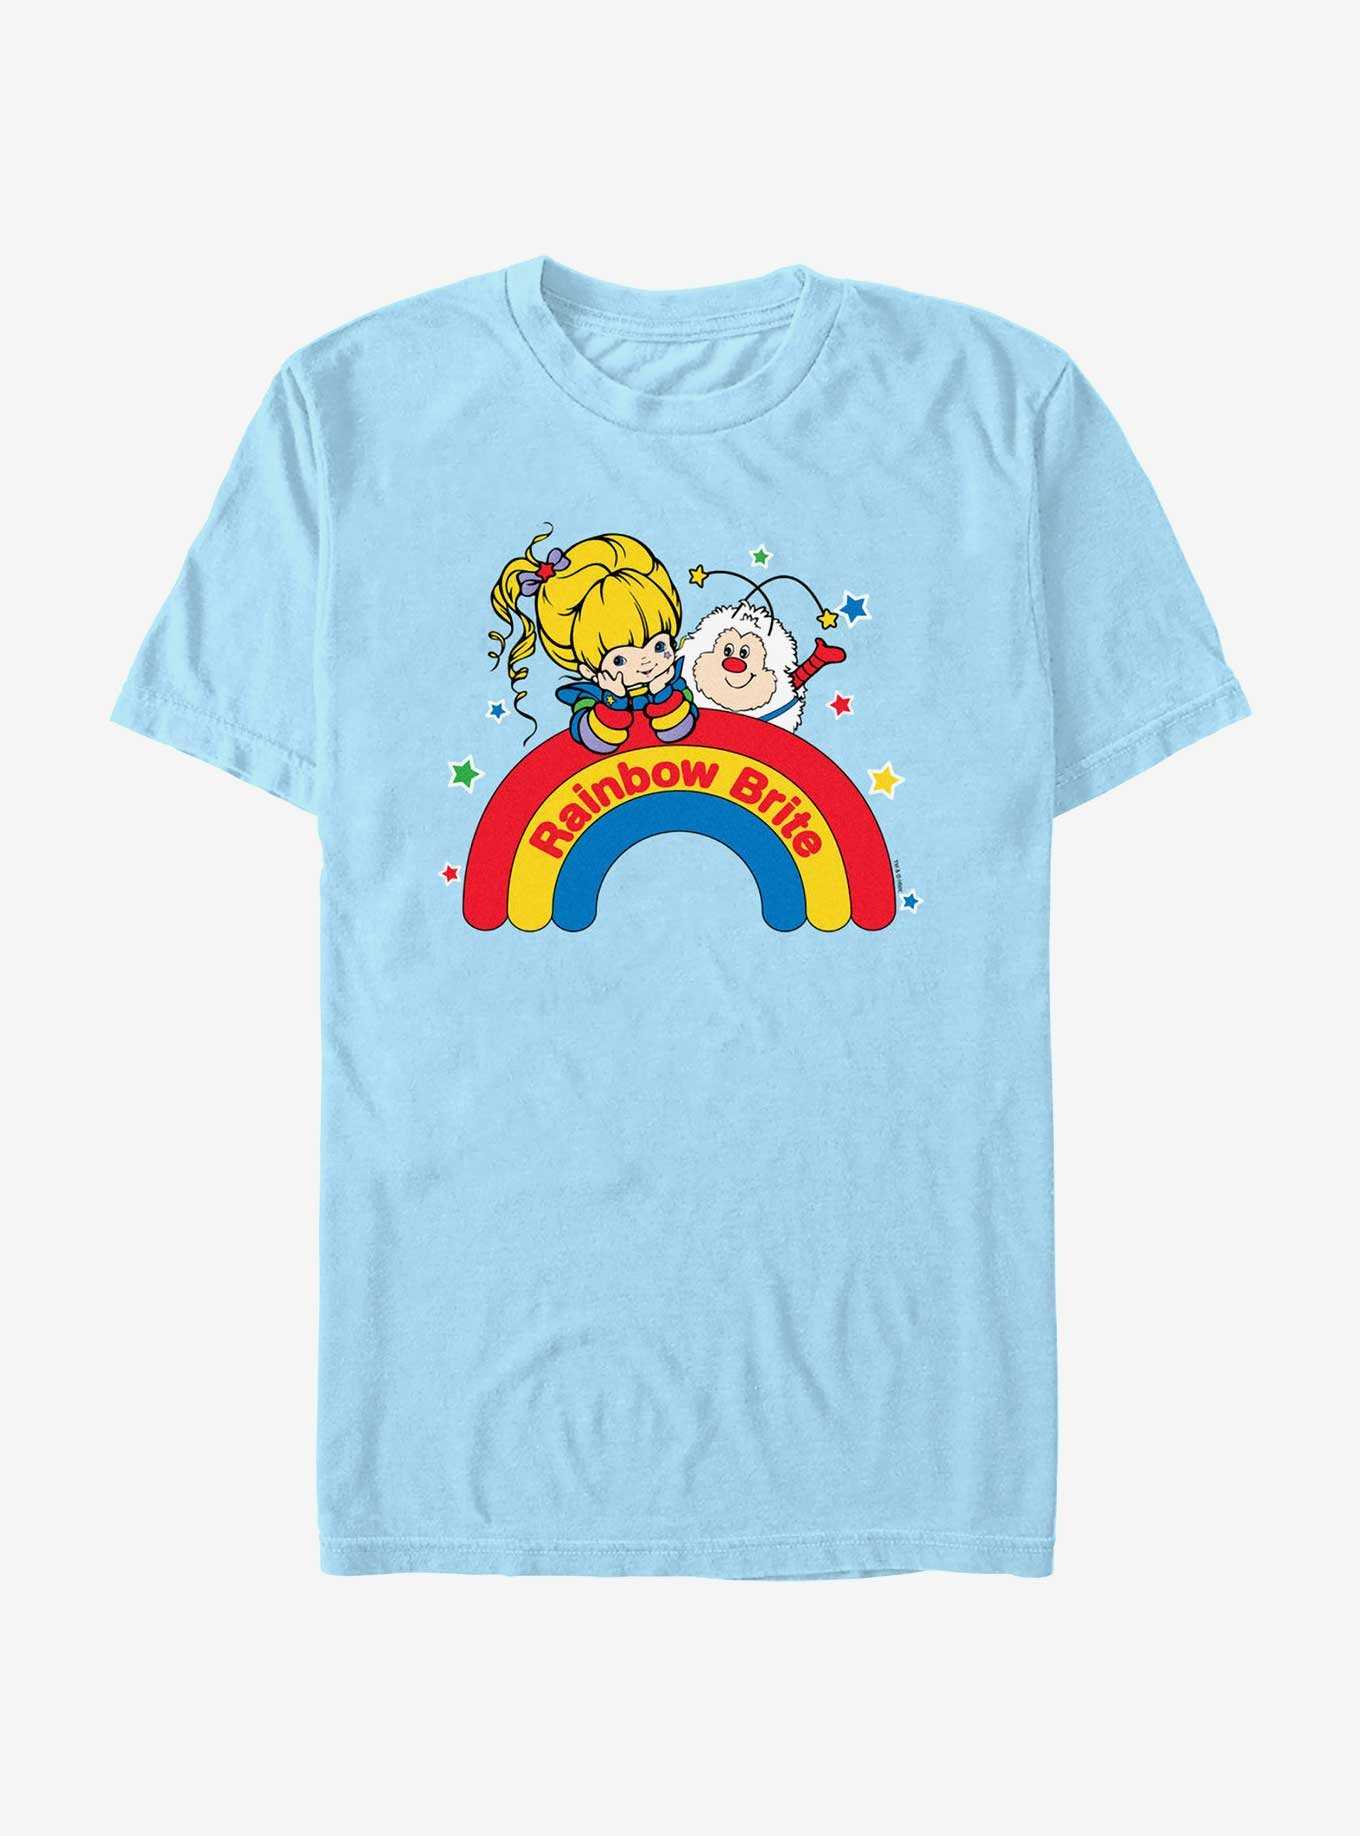 Rainbow Brite Wishing On A Rainbow T-Shirt, , hi-res